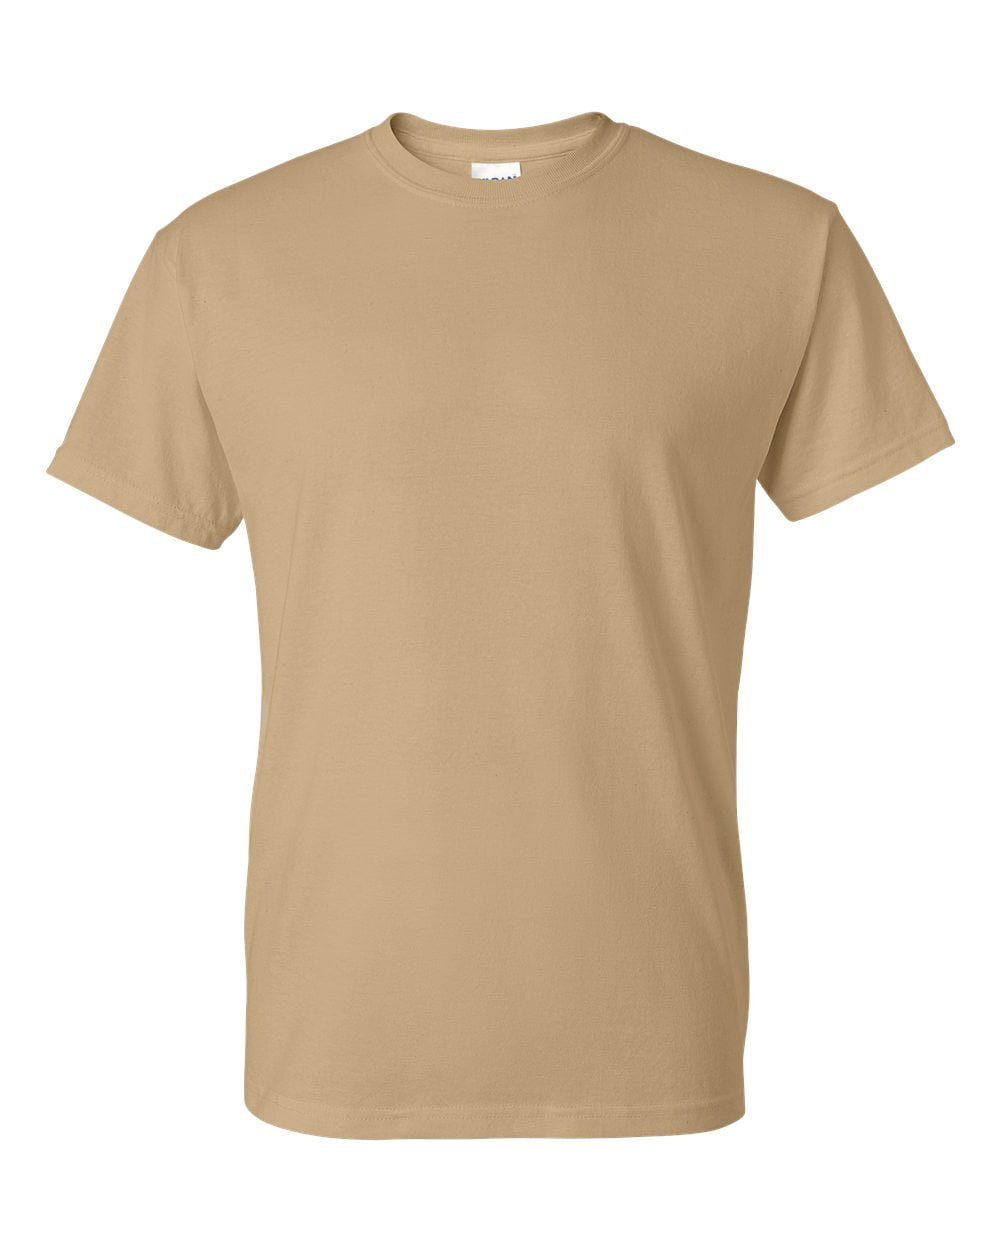 Gildan - Gildan 8000 Men's DryBlend Fashion T-Shirts - Tan - Small ...